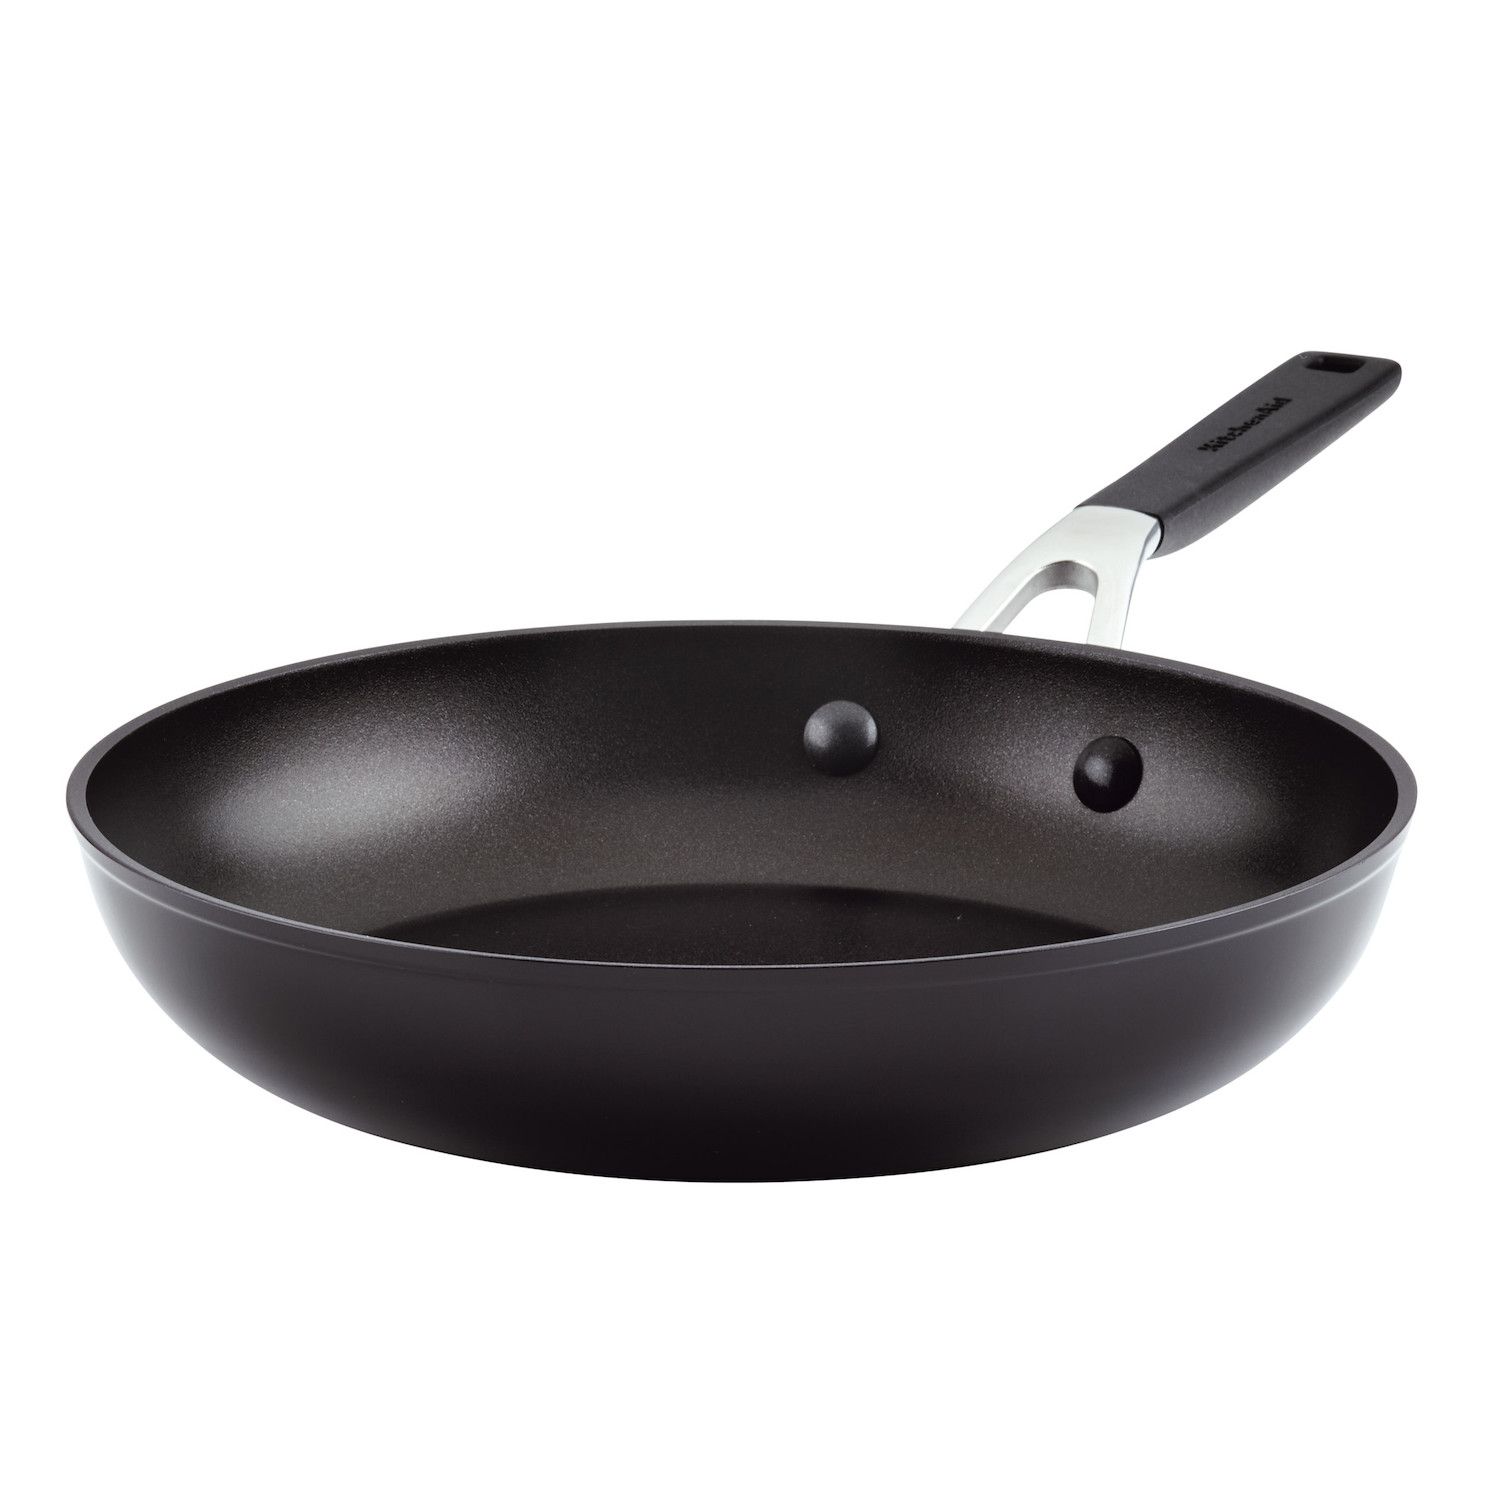  Anolon X Hybrid Nonstick Frying Pan/Skillet, 8.25 Inch, Dark  Gray: Home & Kitchen